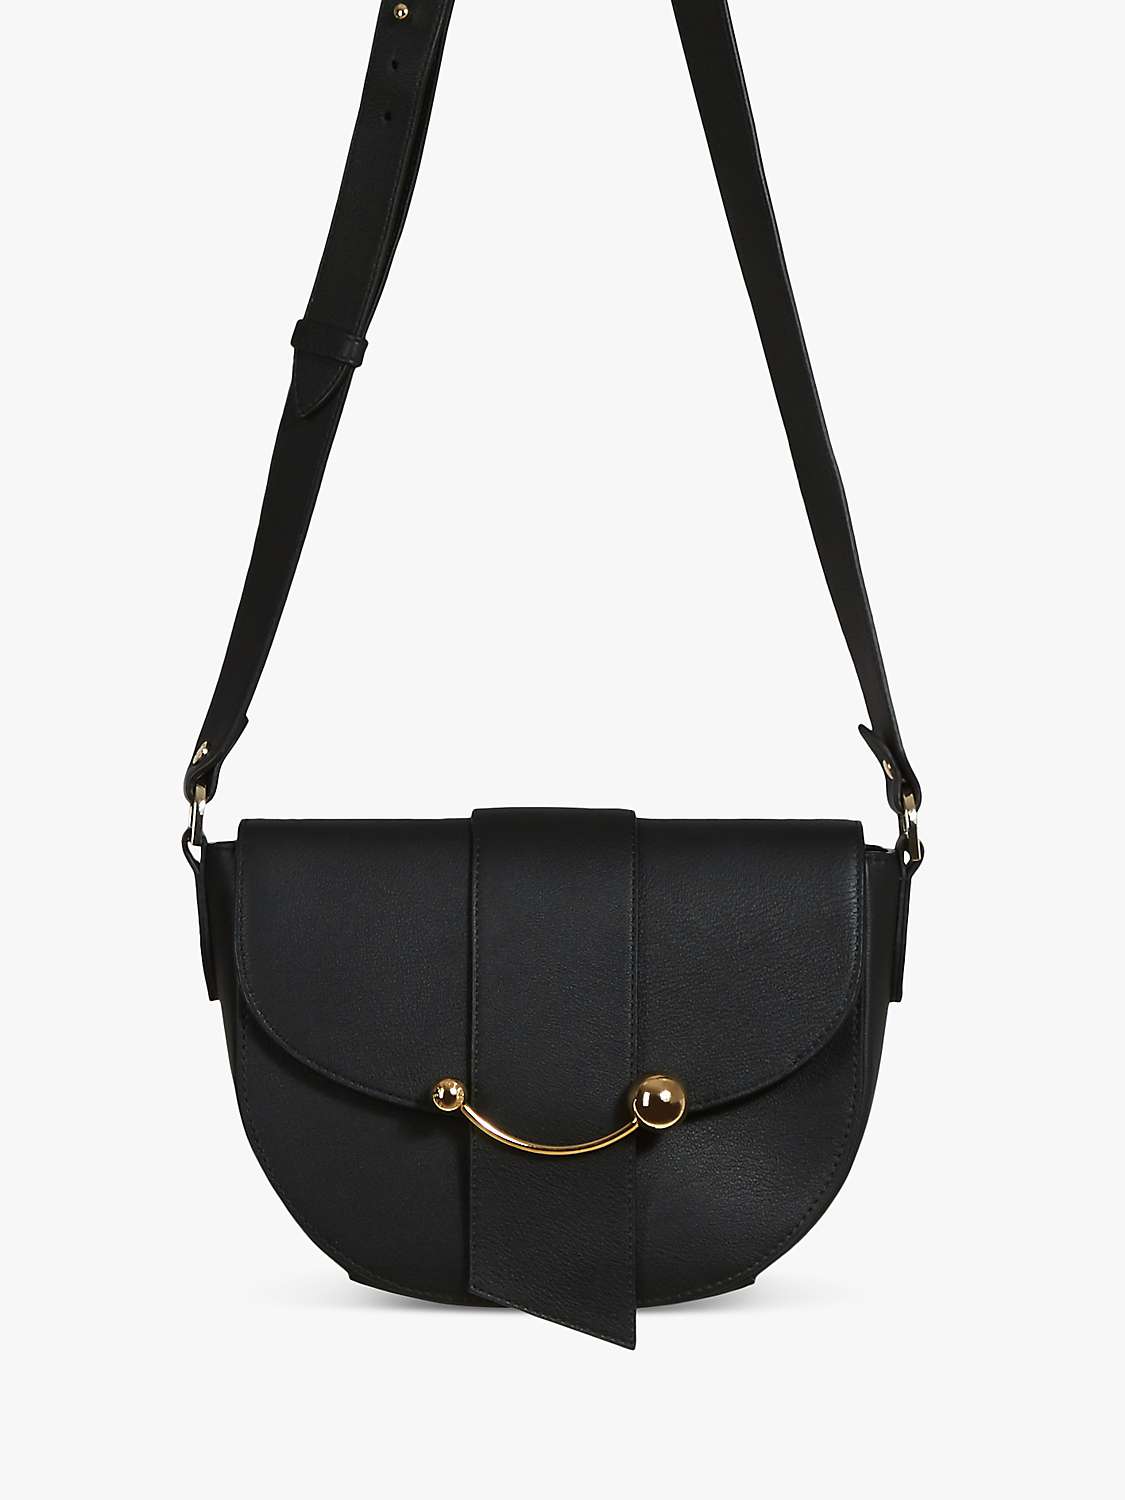 Buy Strathberry Crescent Leather Satchel Bag Online at johnlewis.com